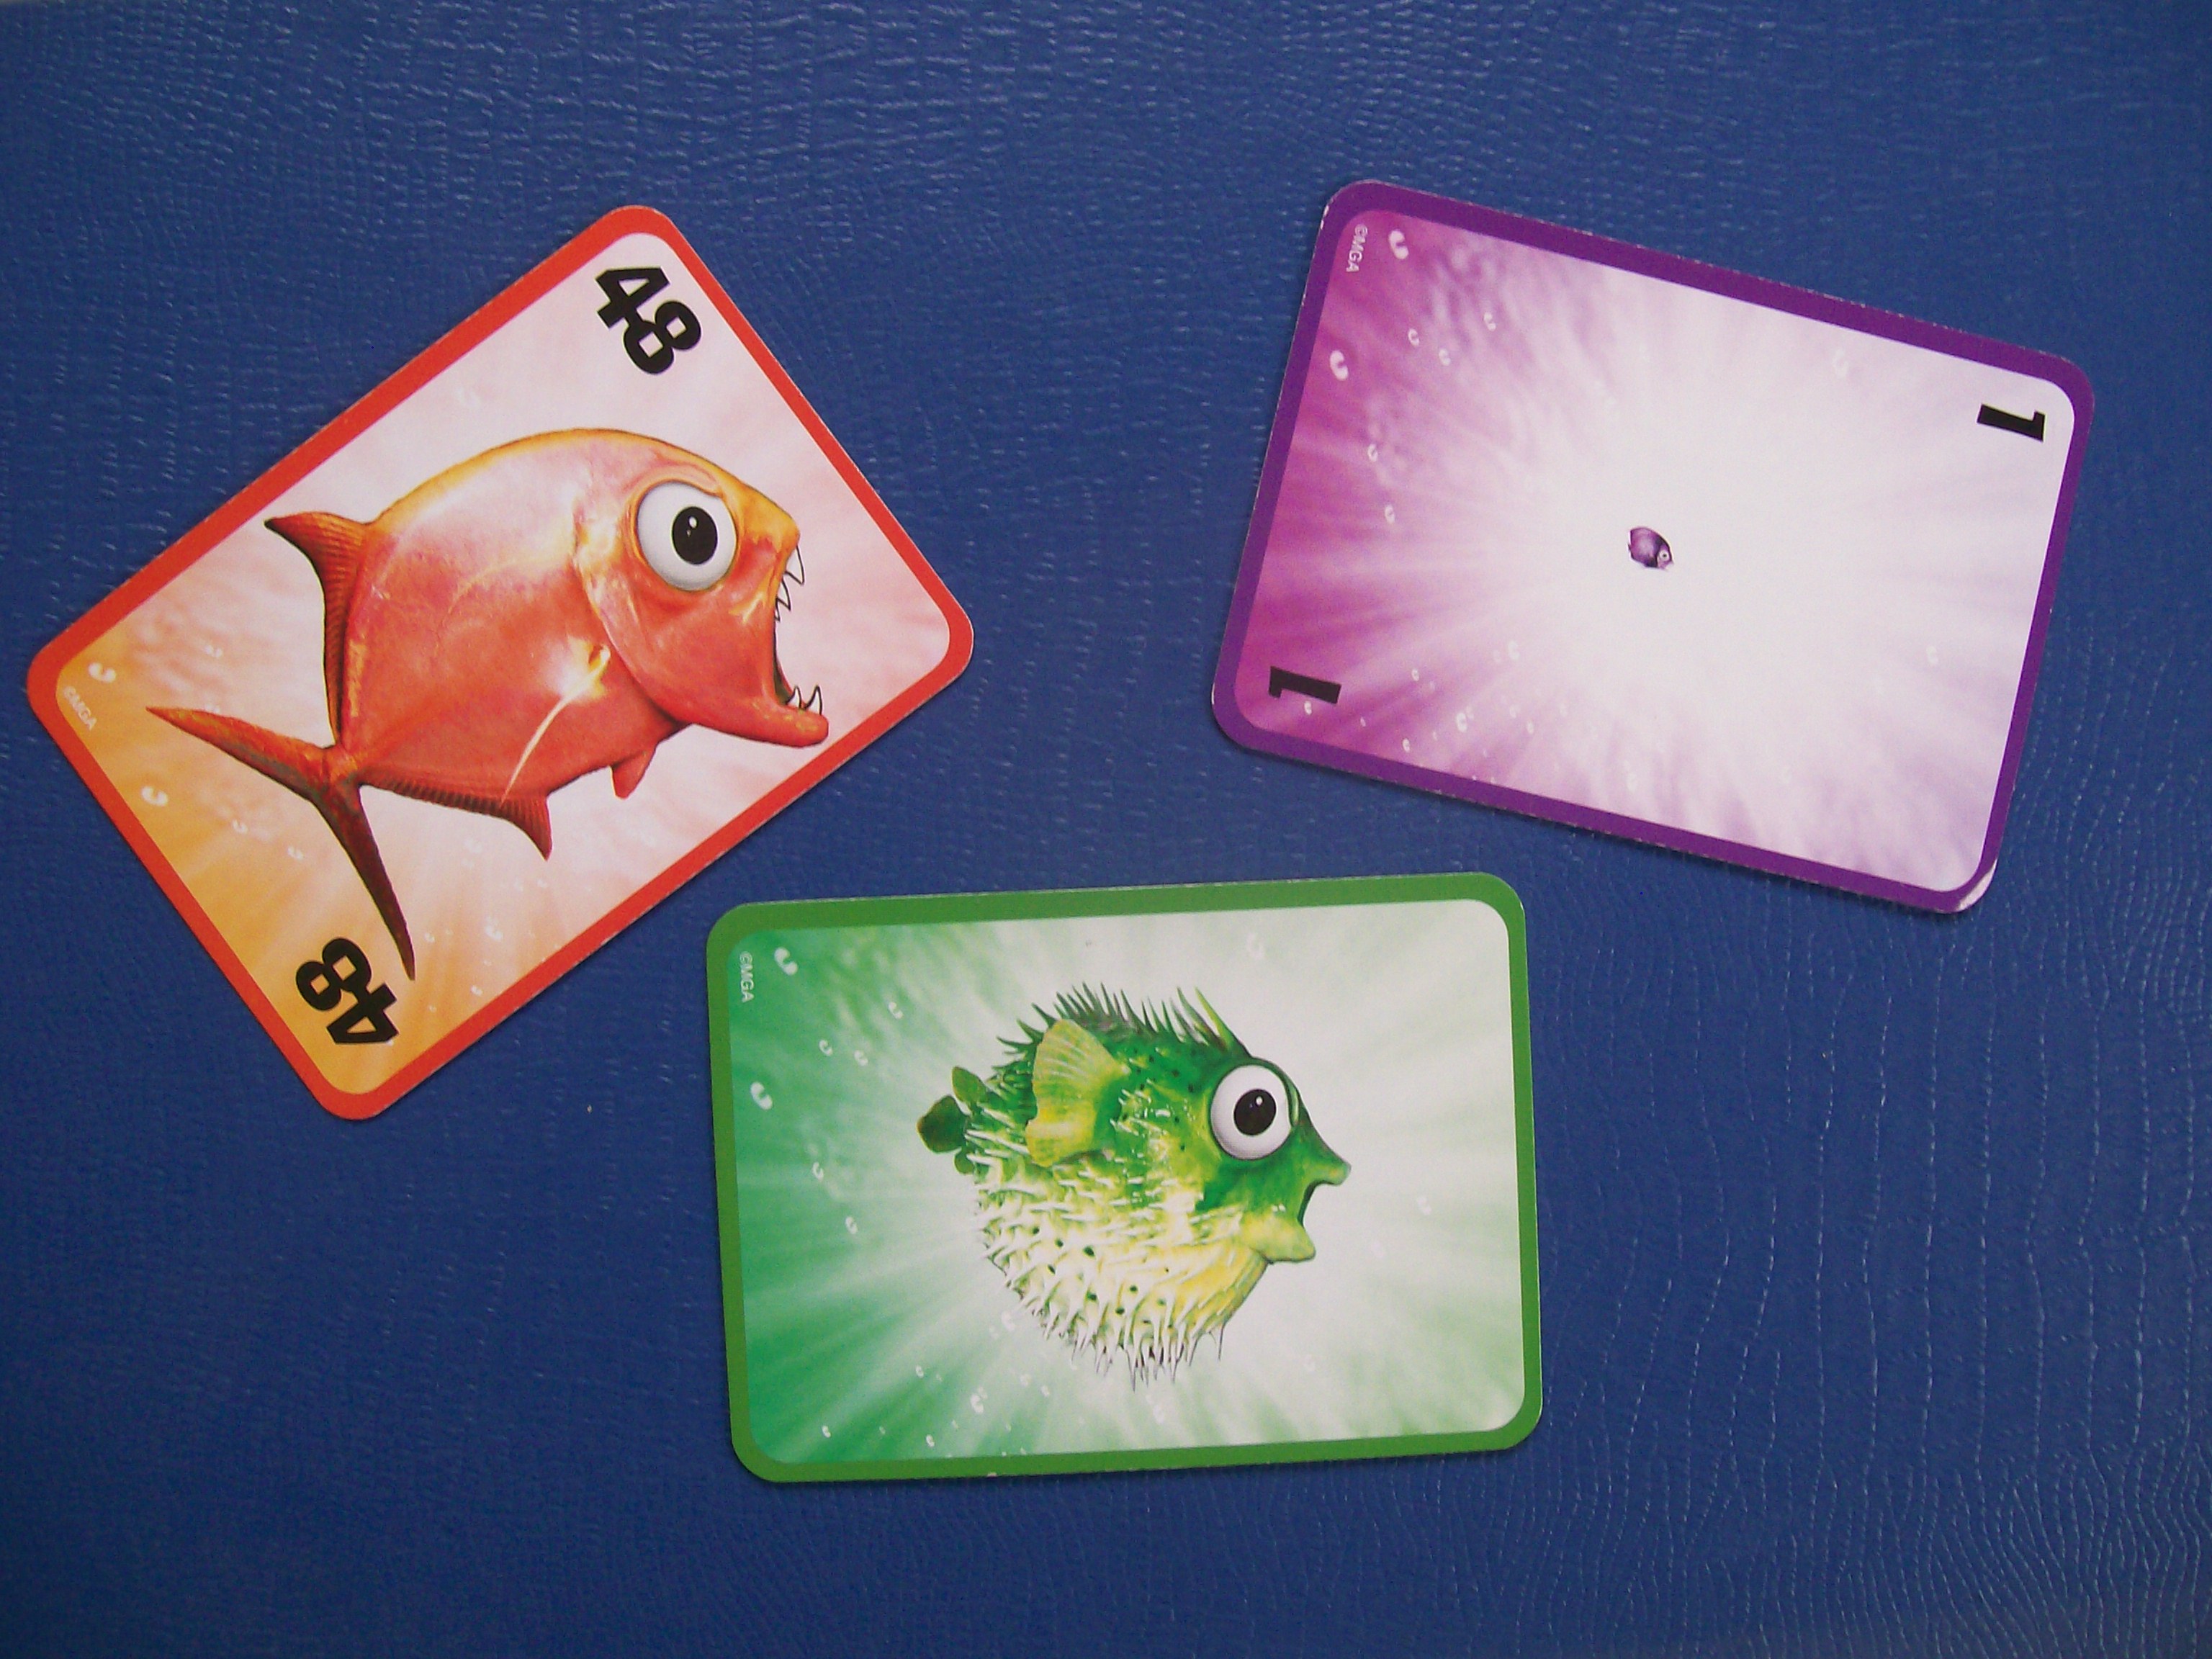 Little Big Fish Board Game